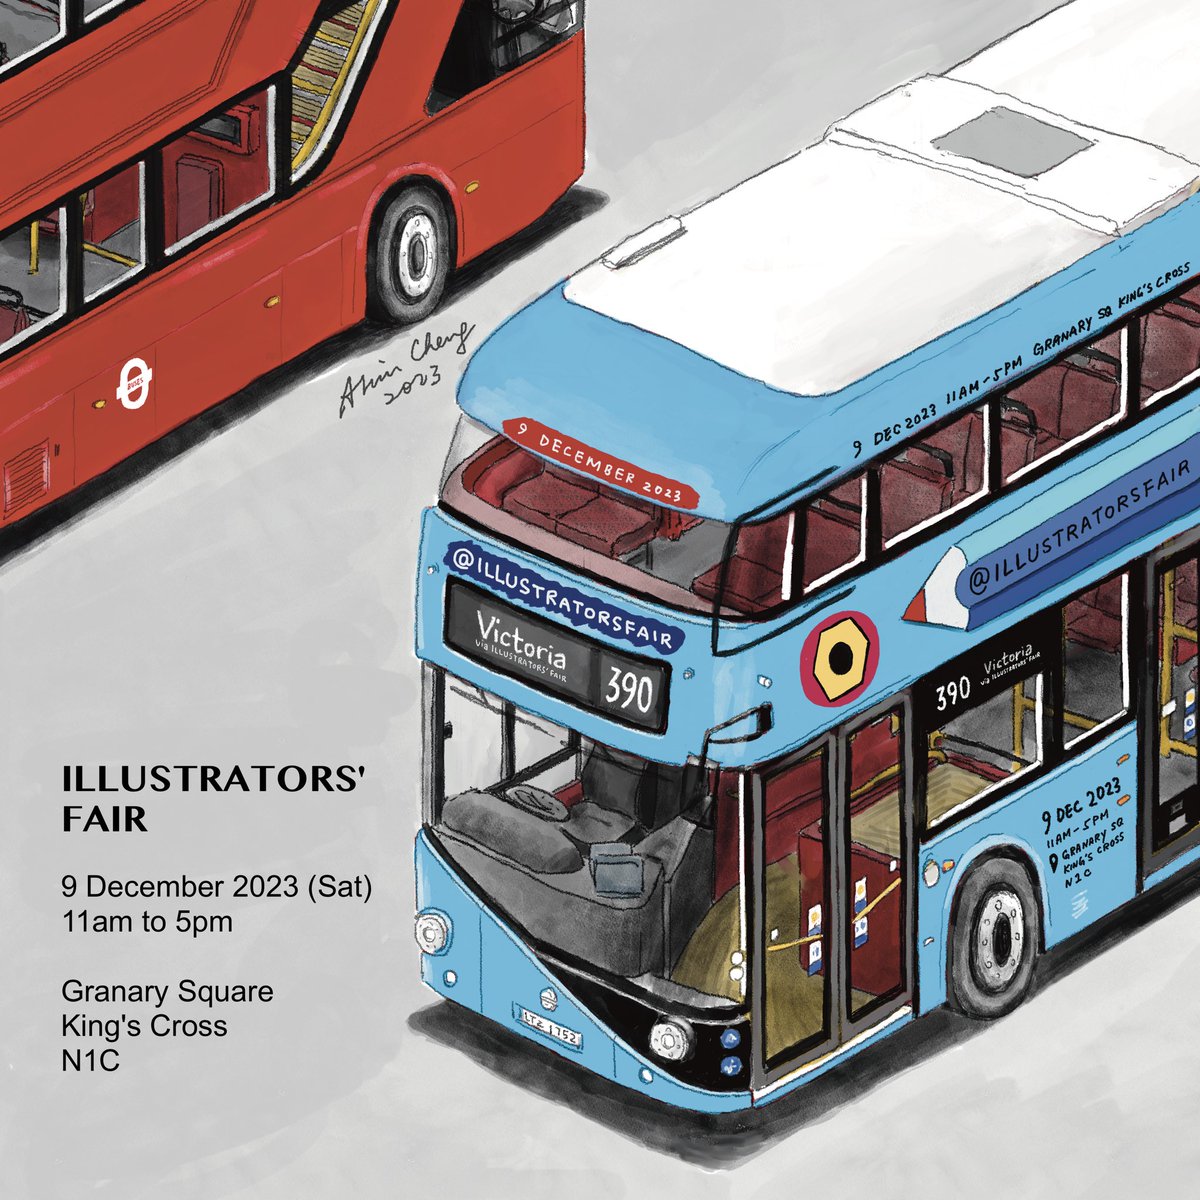 Feel free to find me @IllustratorsFa1 this Saturday (9 December 2023: 11am to 5pm — Granary Square, King's Cross N1C)

#illustratorsfair #illustratorsfair23 #kingscrossn1c #festivalofflyer